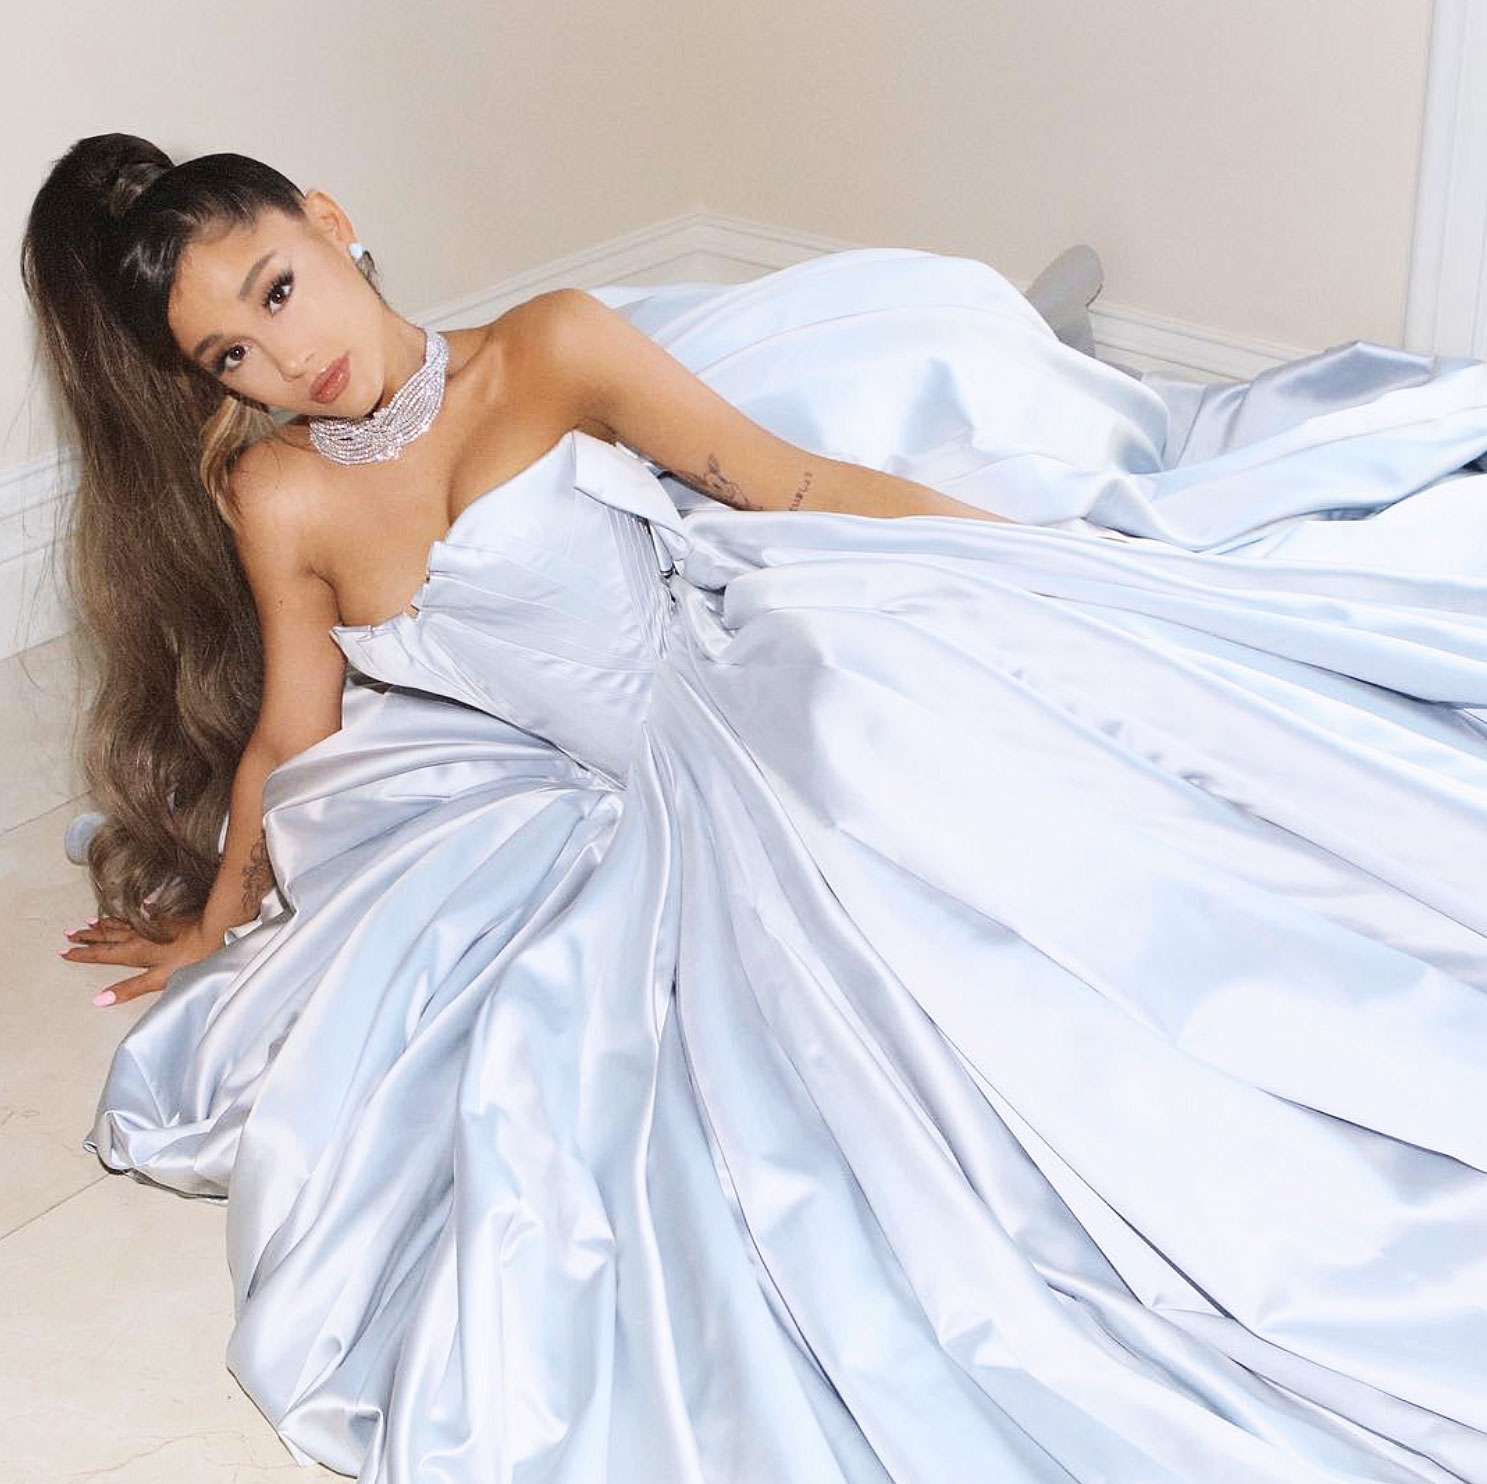 https://www.usmagazine.com/wp-content/uploads/2019/02/Ariana-Grande-Poses-Zac-Posen-Dress-Instagram-Grammys-2019-06.jpg?quality=86&strip=all